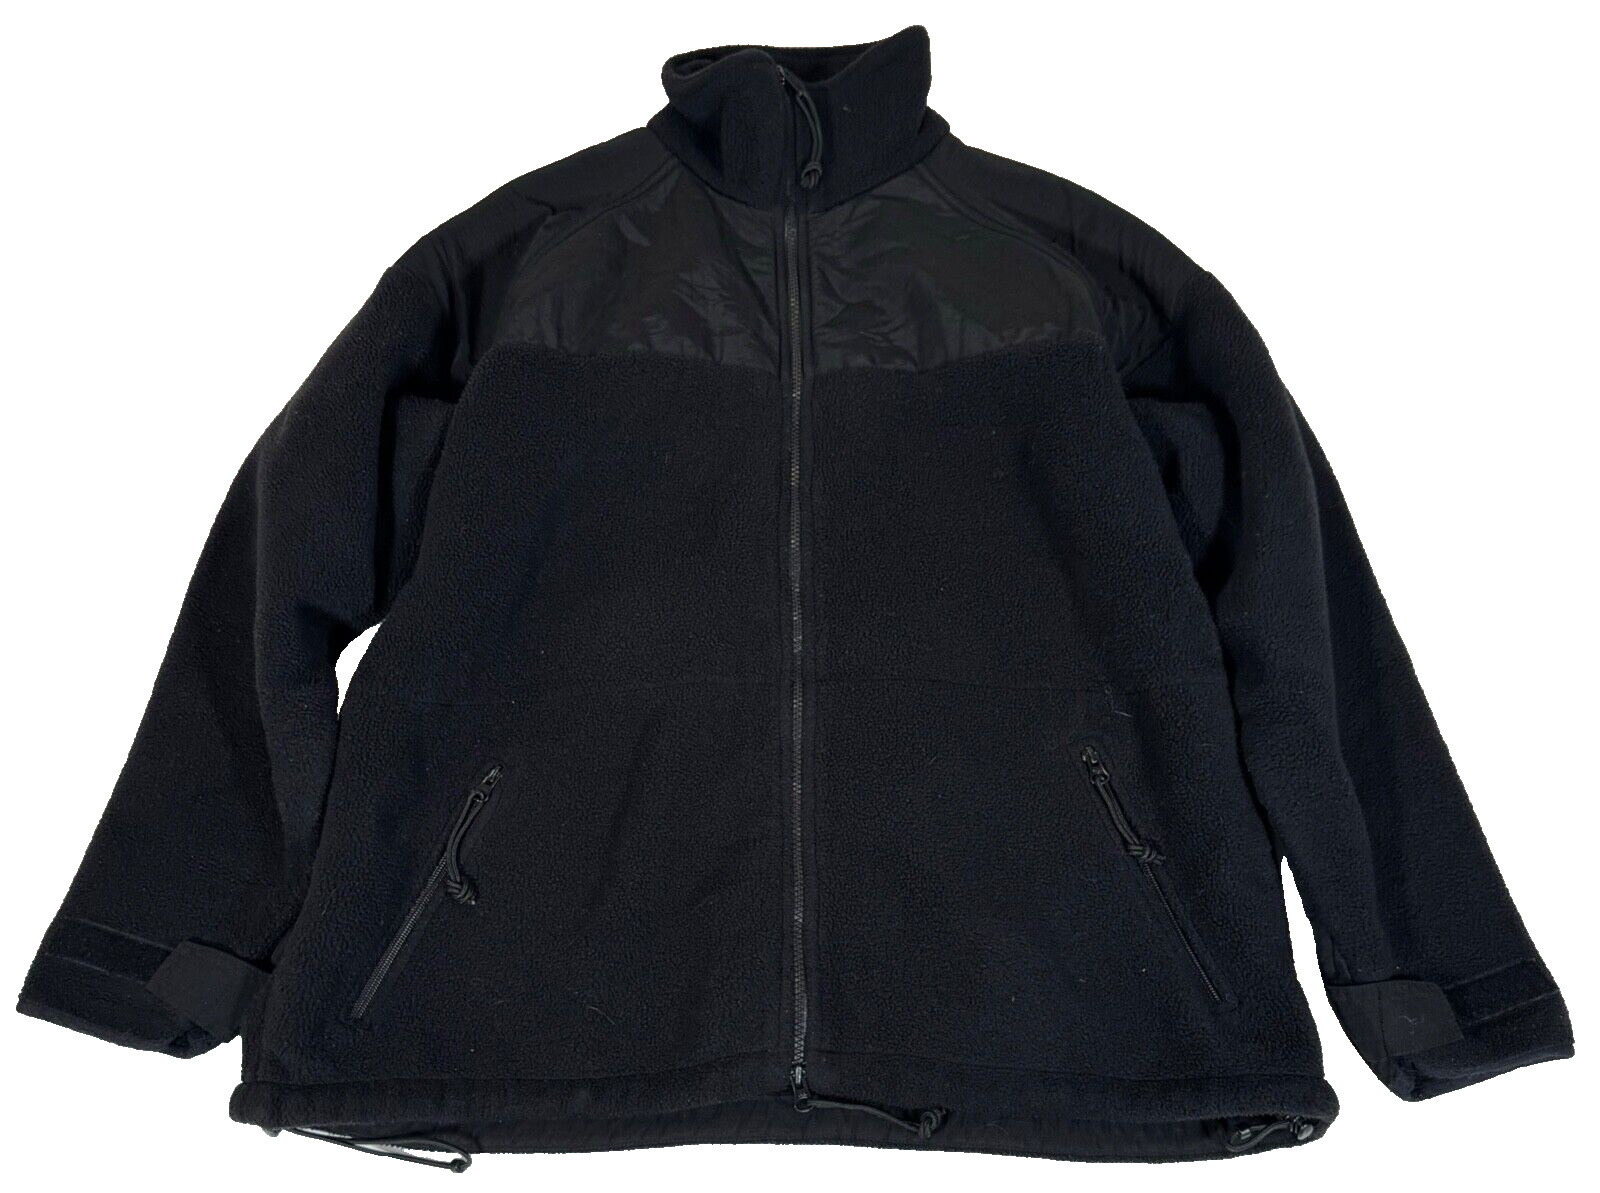 DSCP US Army Military Polartec Cold Weather Fleece Shirt Jacket Black Large